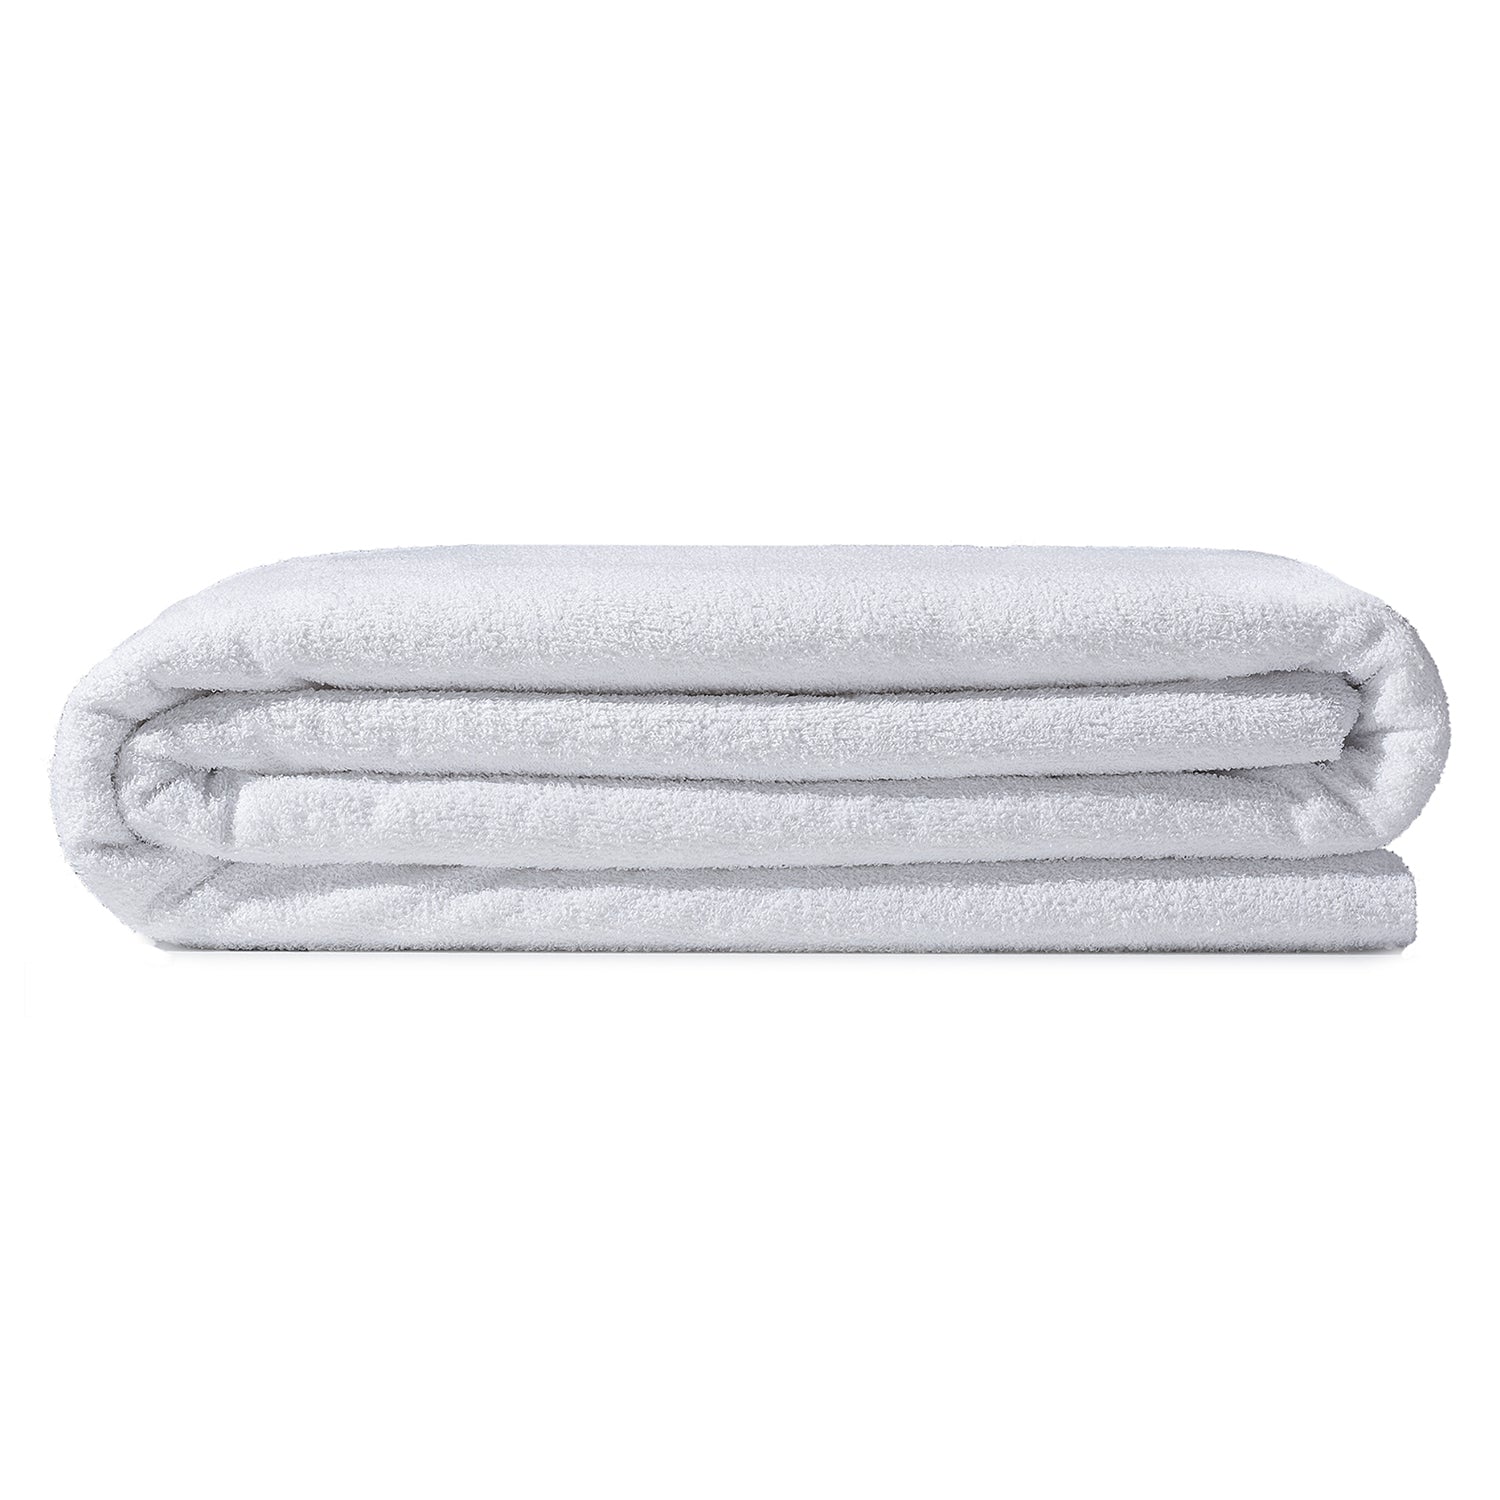 Terry Cloth Waterproof Bundle | Premium Cotton Terry Cloth Waterproof Mattress Protector & Pillow Protector, 3pc